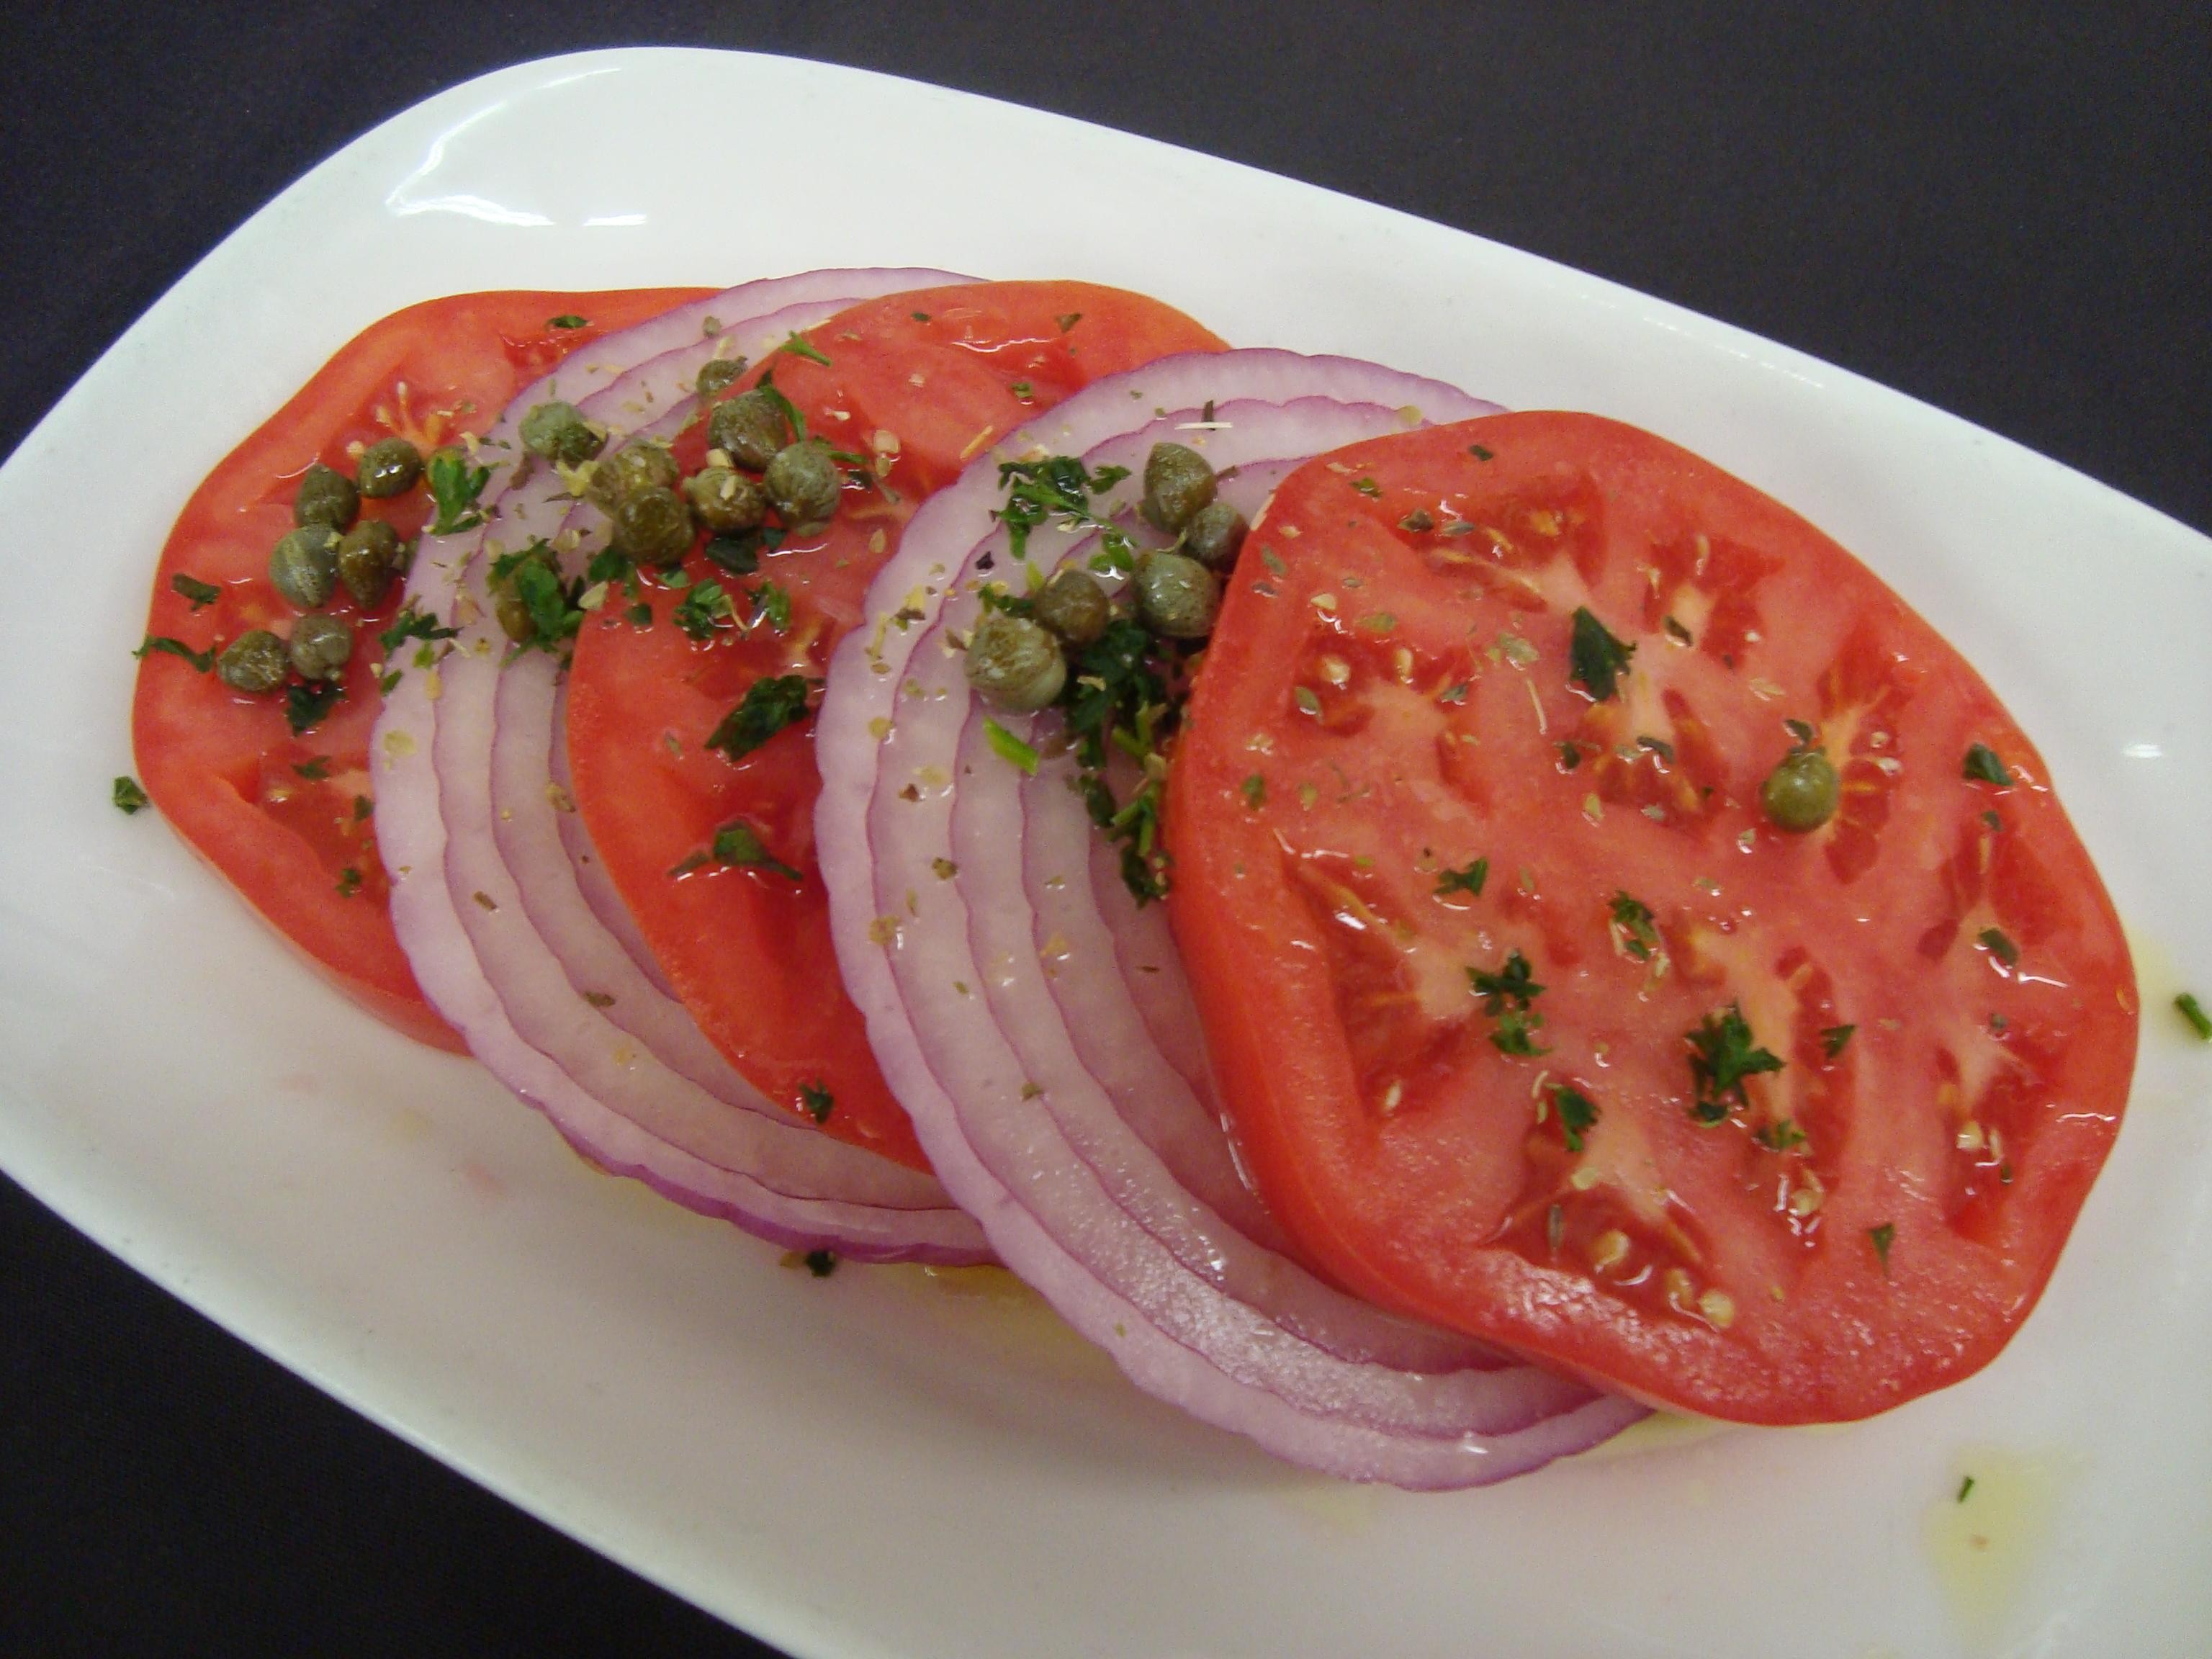 Tomato & Onion